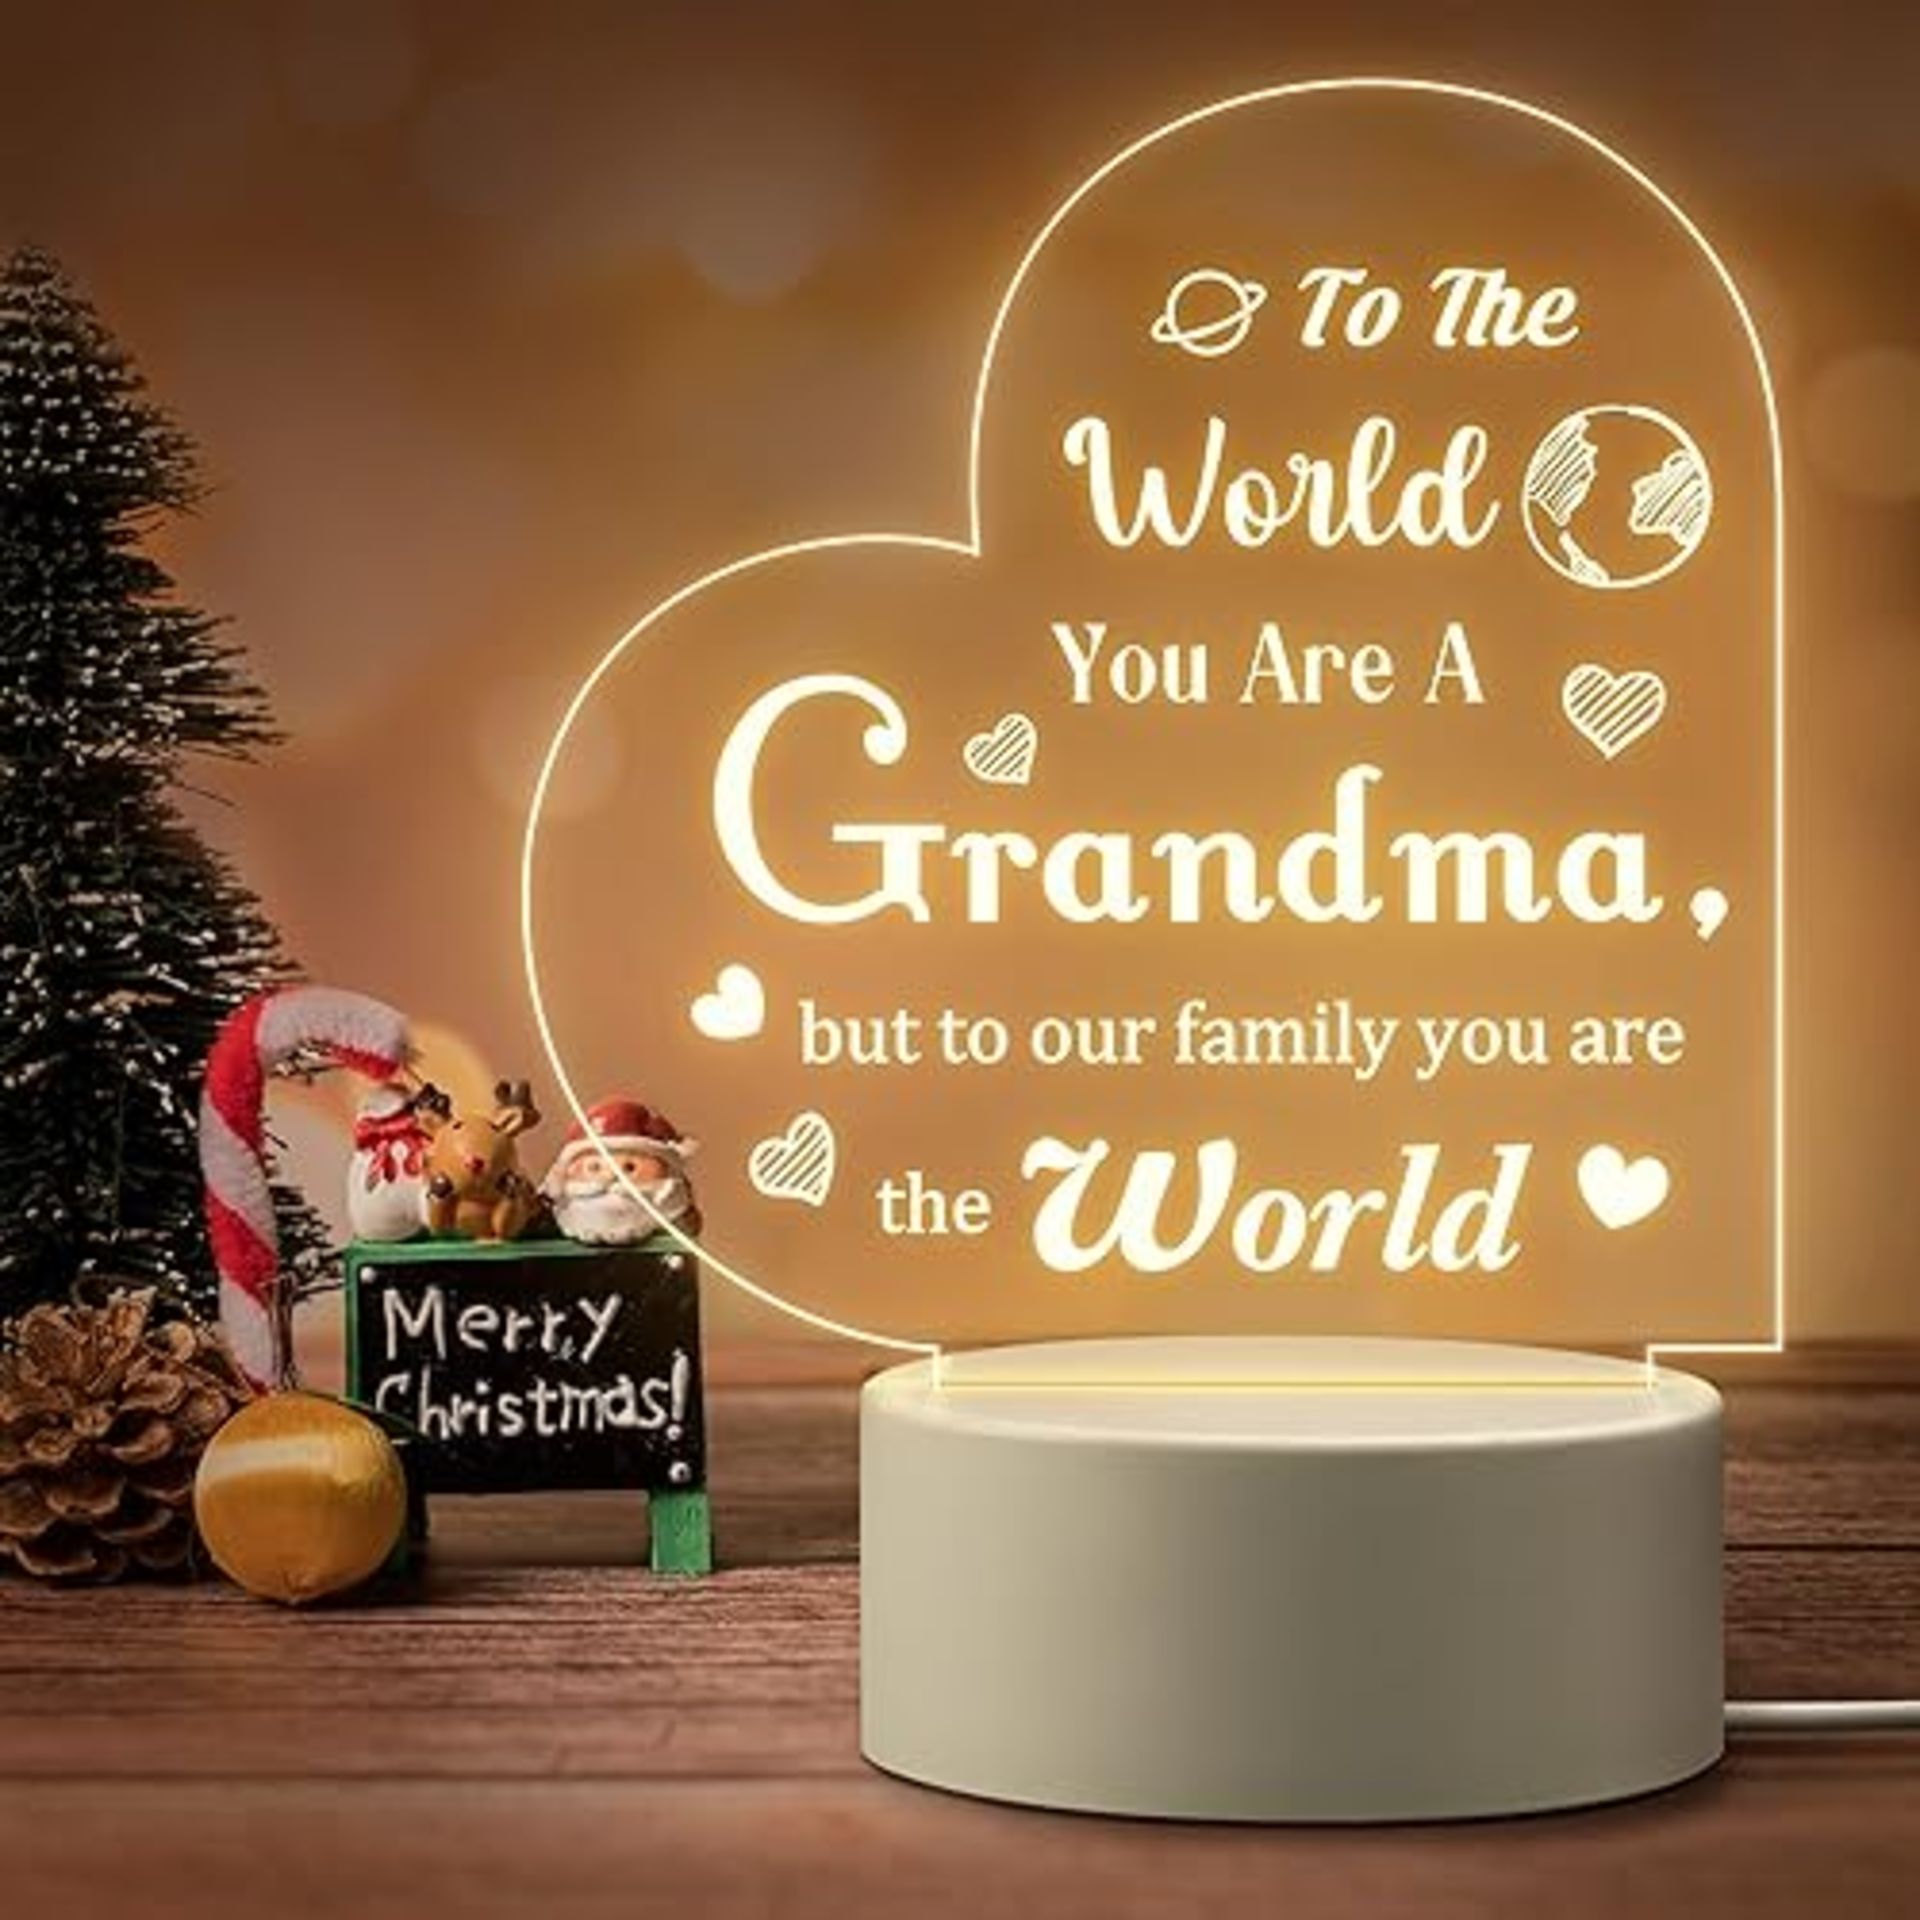 Elequaint Christmas Birthday Gifts for Grandma, Grandma Christmas Gifts from Grandchildren, Persona